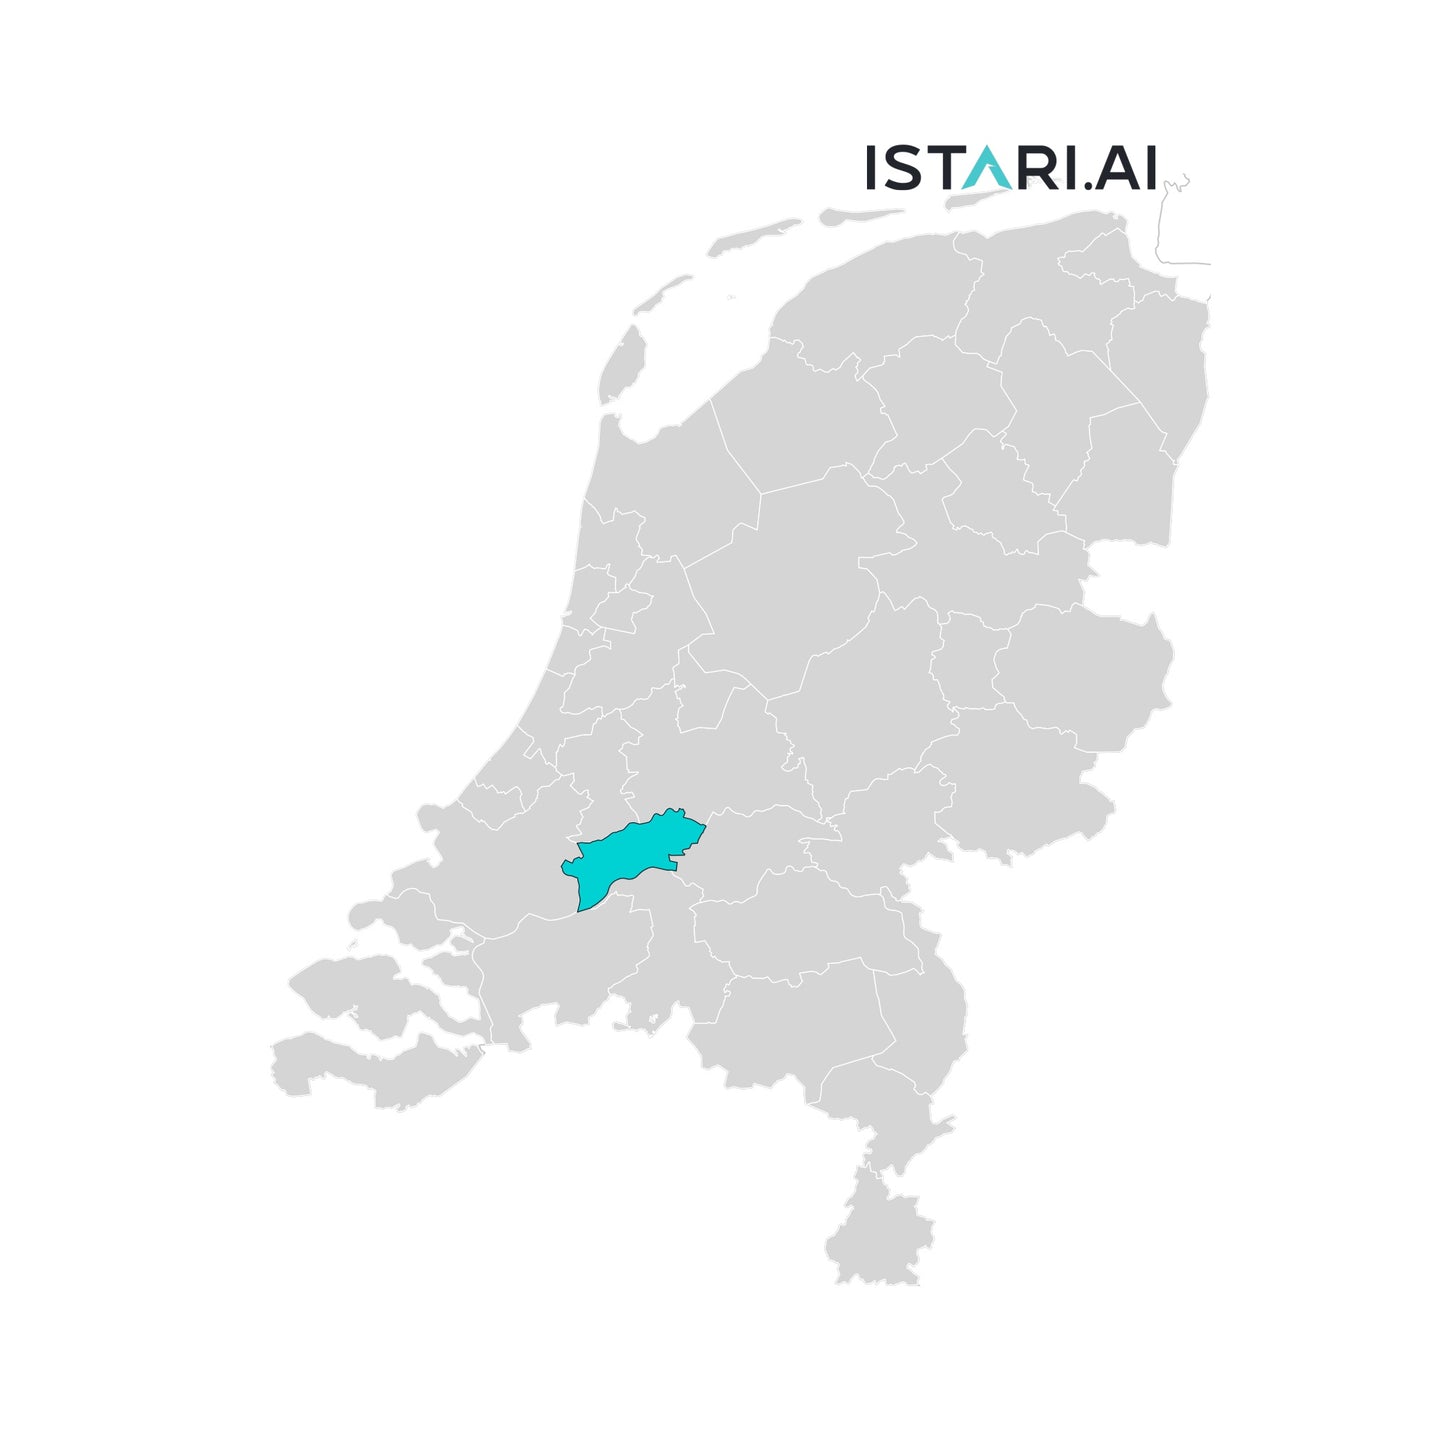 Digital Health Company List Zuidoost-Zuid-Holland Netherlands